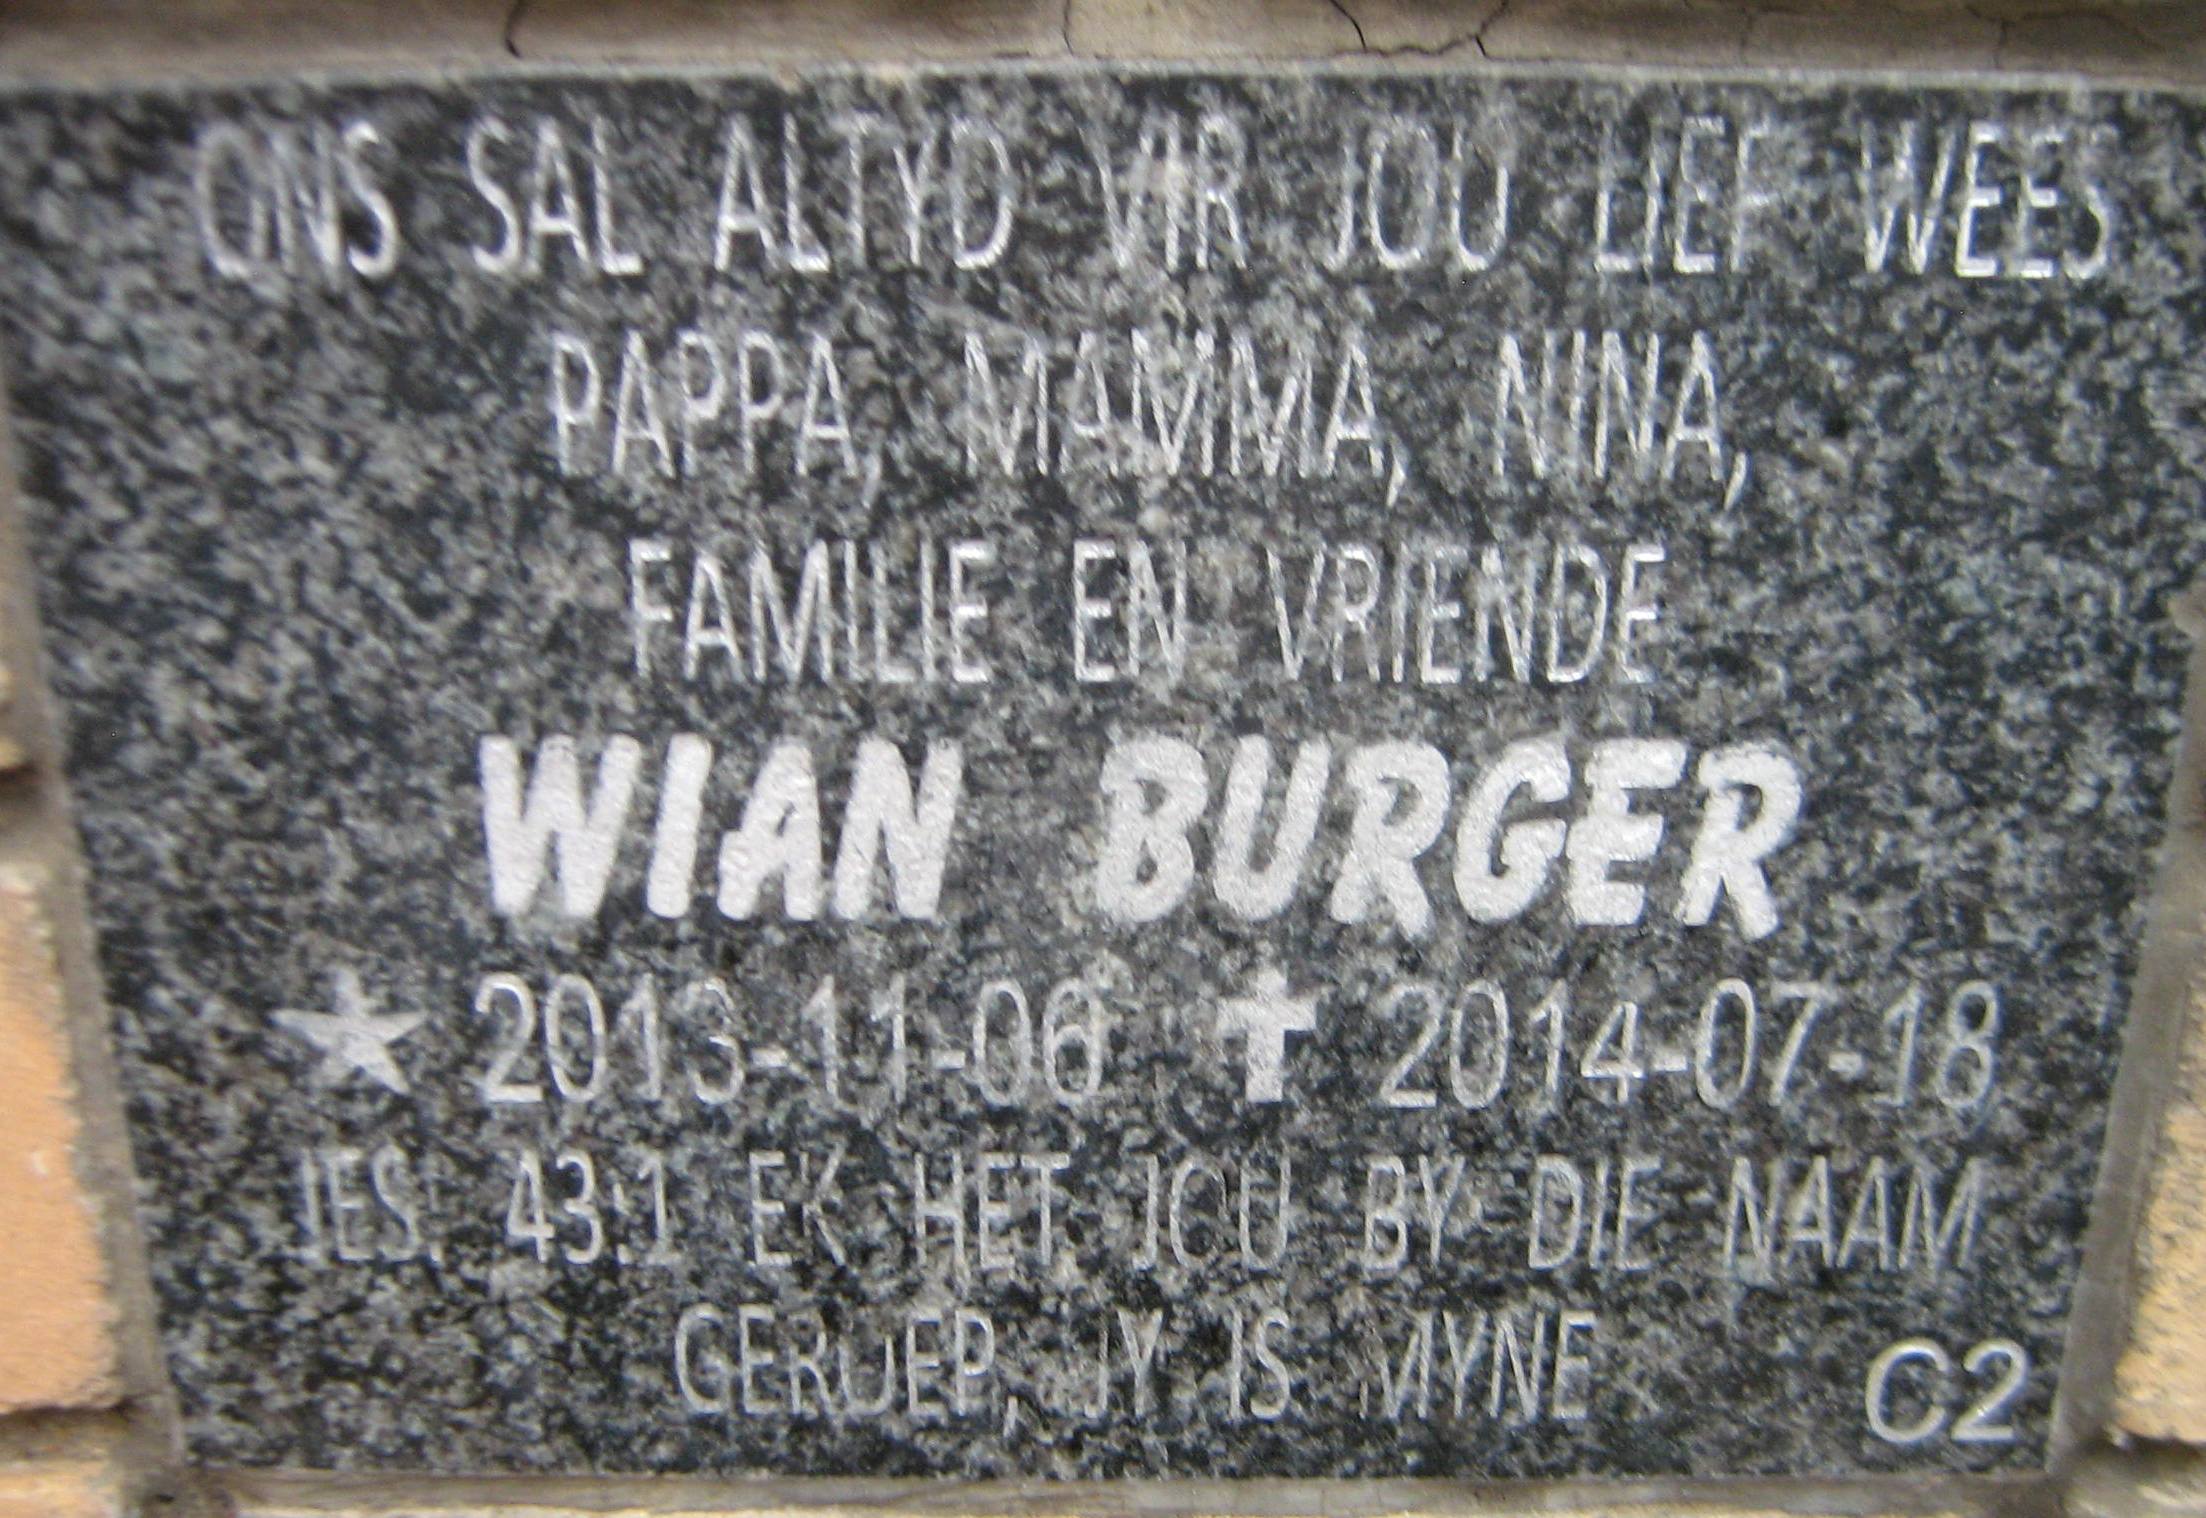 BURGER Wian 2013-2014